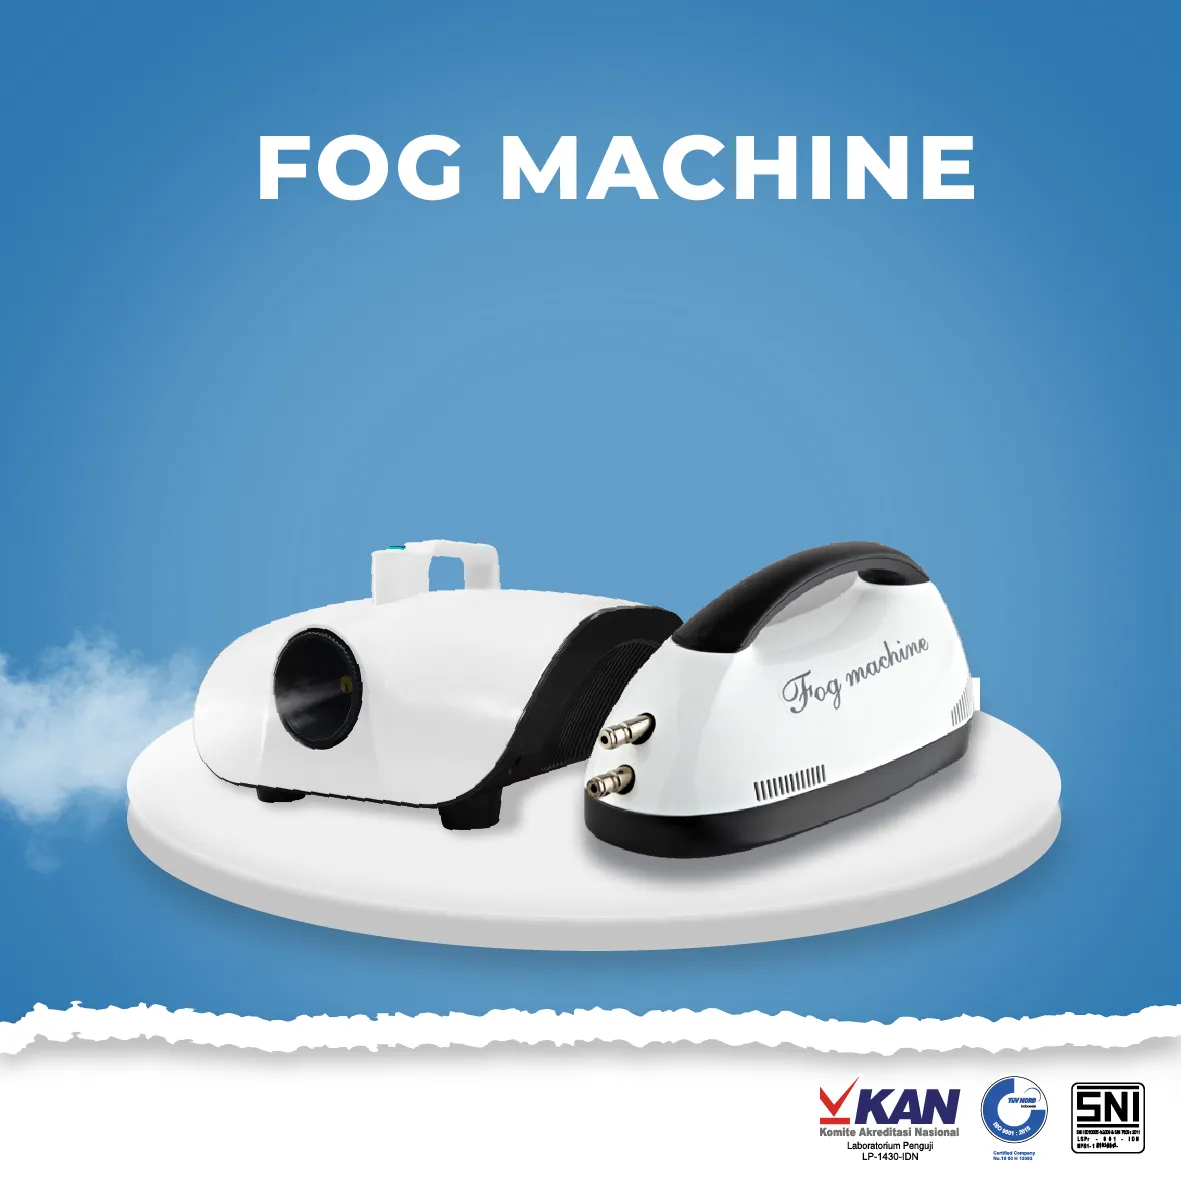  Fog Machine spray fan template cover website 04